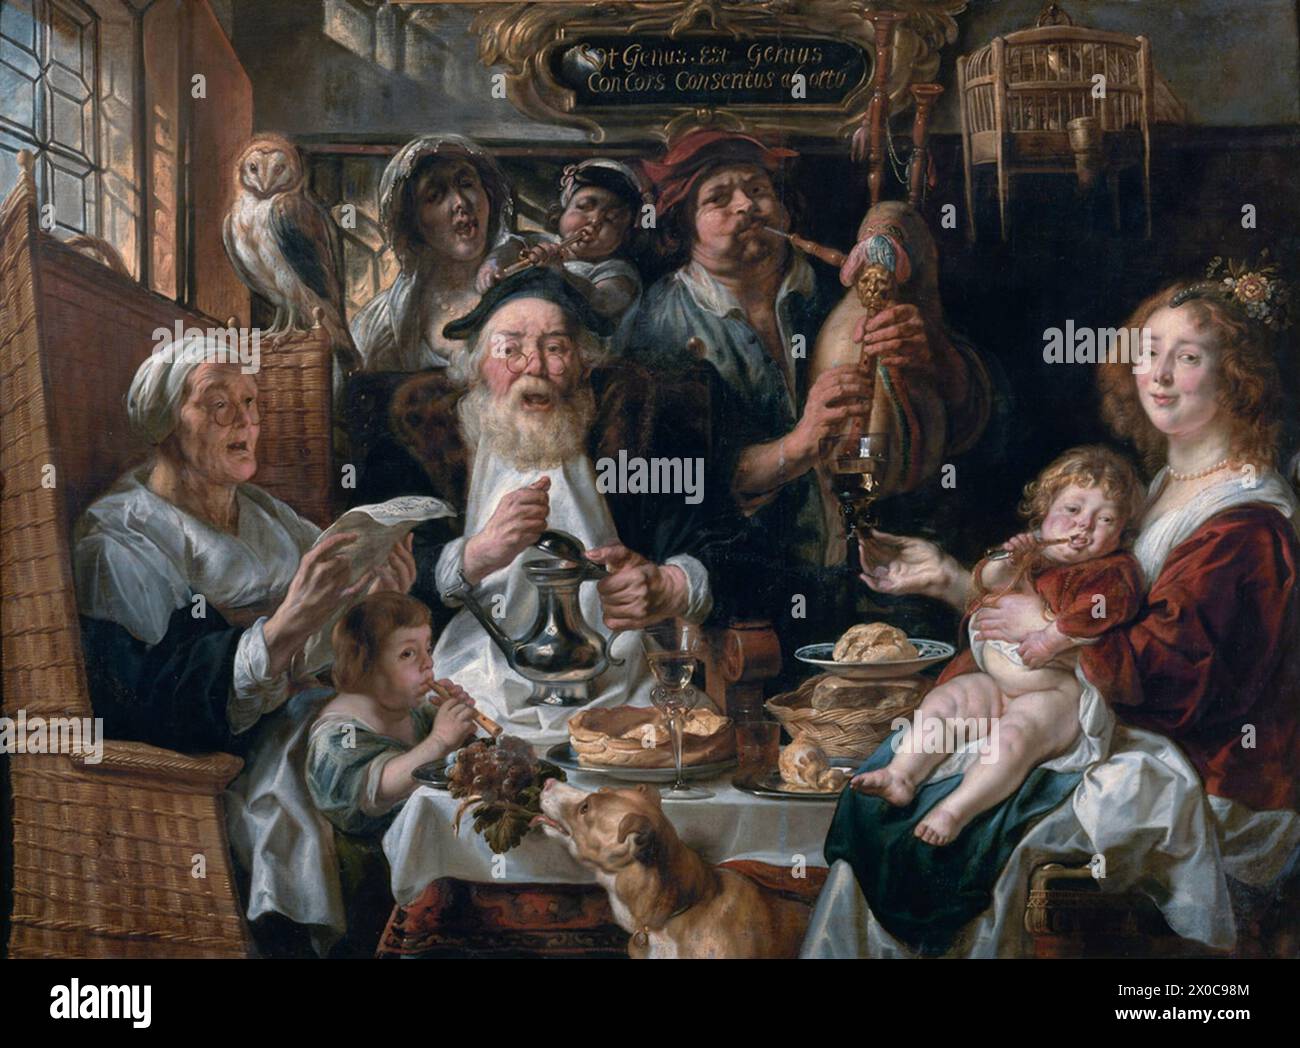 Wie die Alten singen, so die junge Pfeife Jacob Jordaens (1593–1678) Barockmalerei Stockfoto